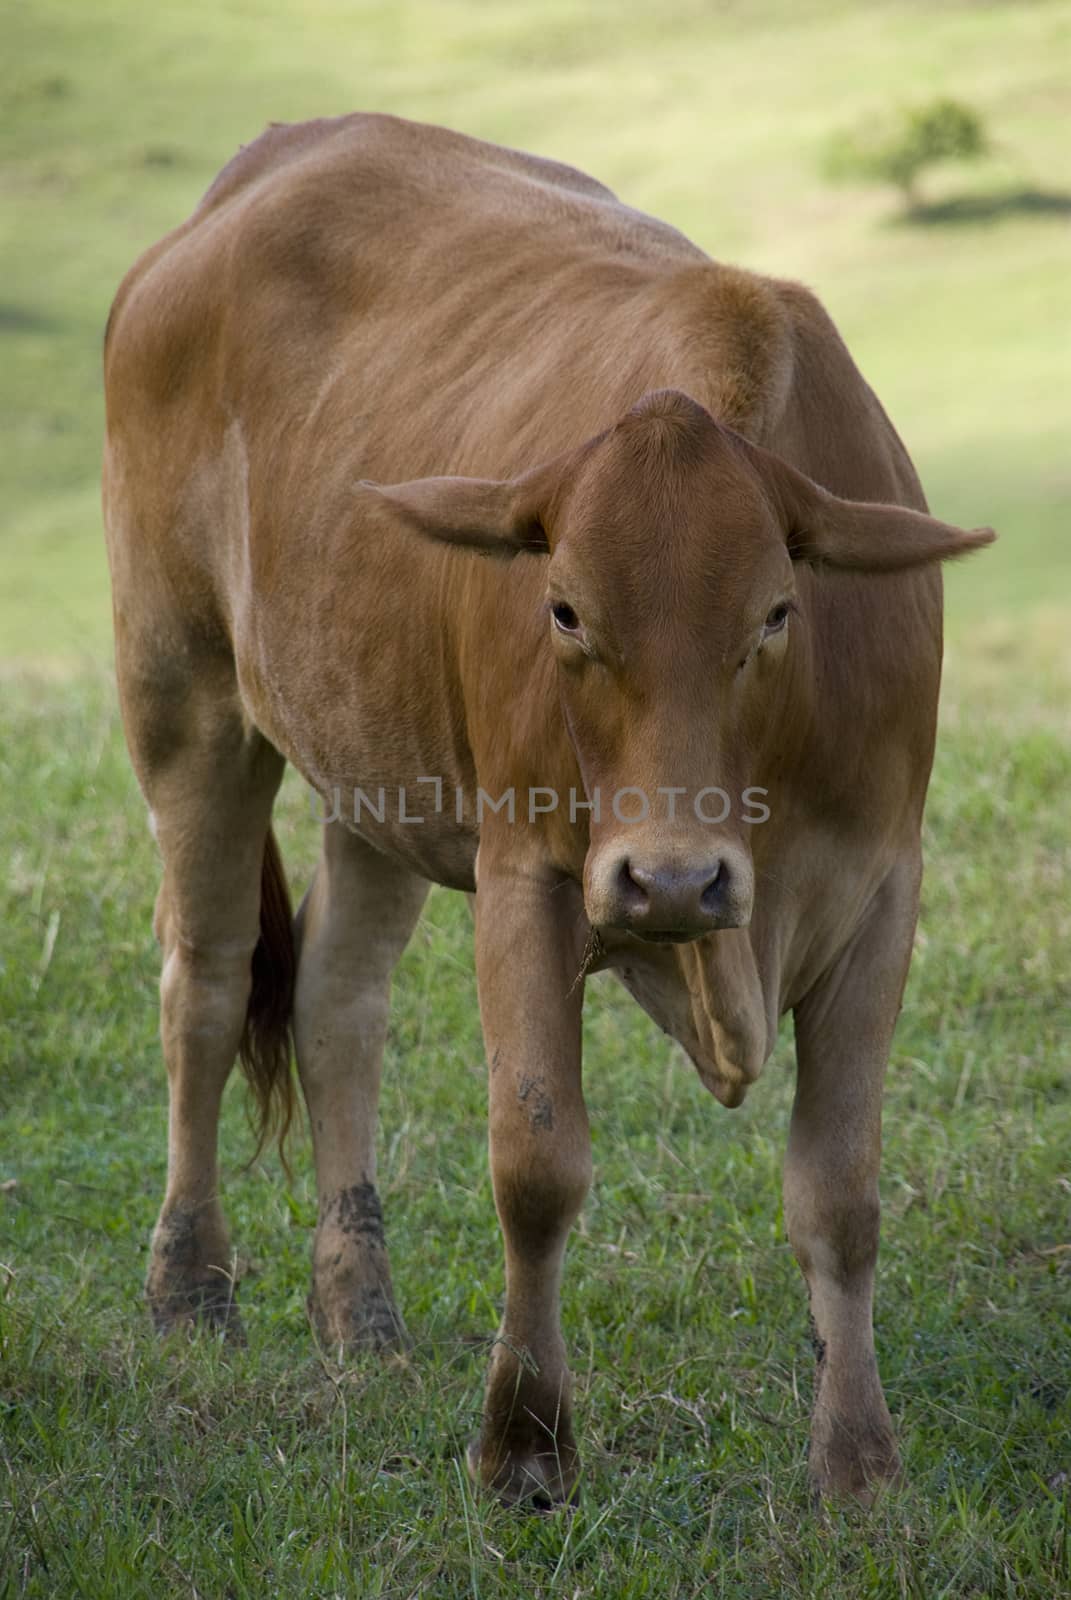 Cow on a farm in Queensland, Australia